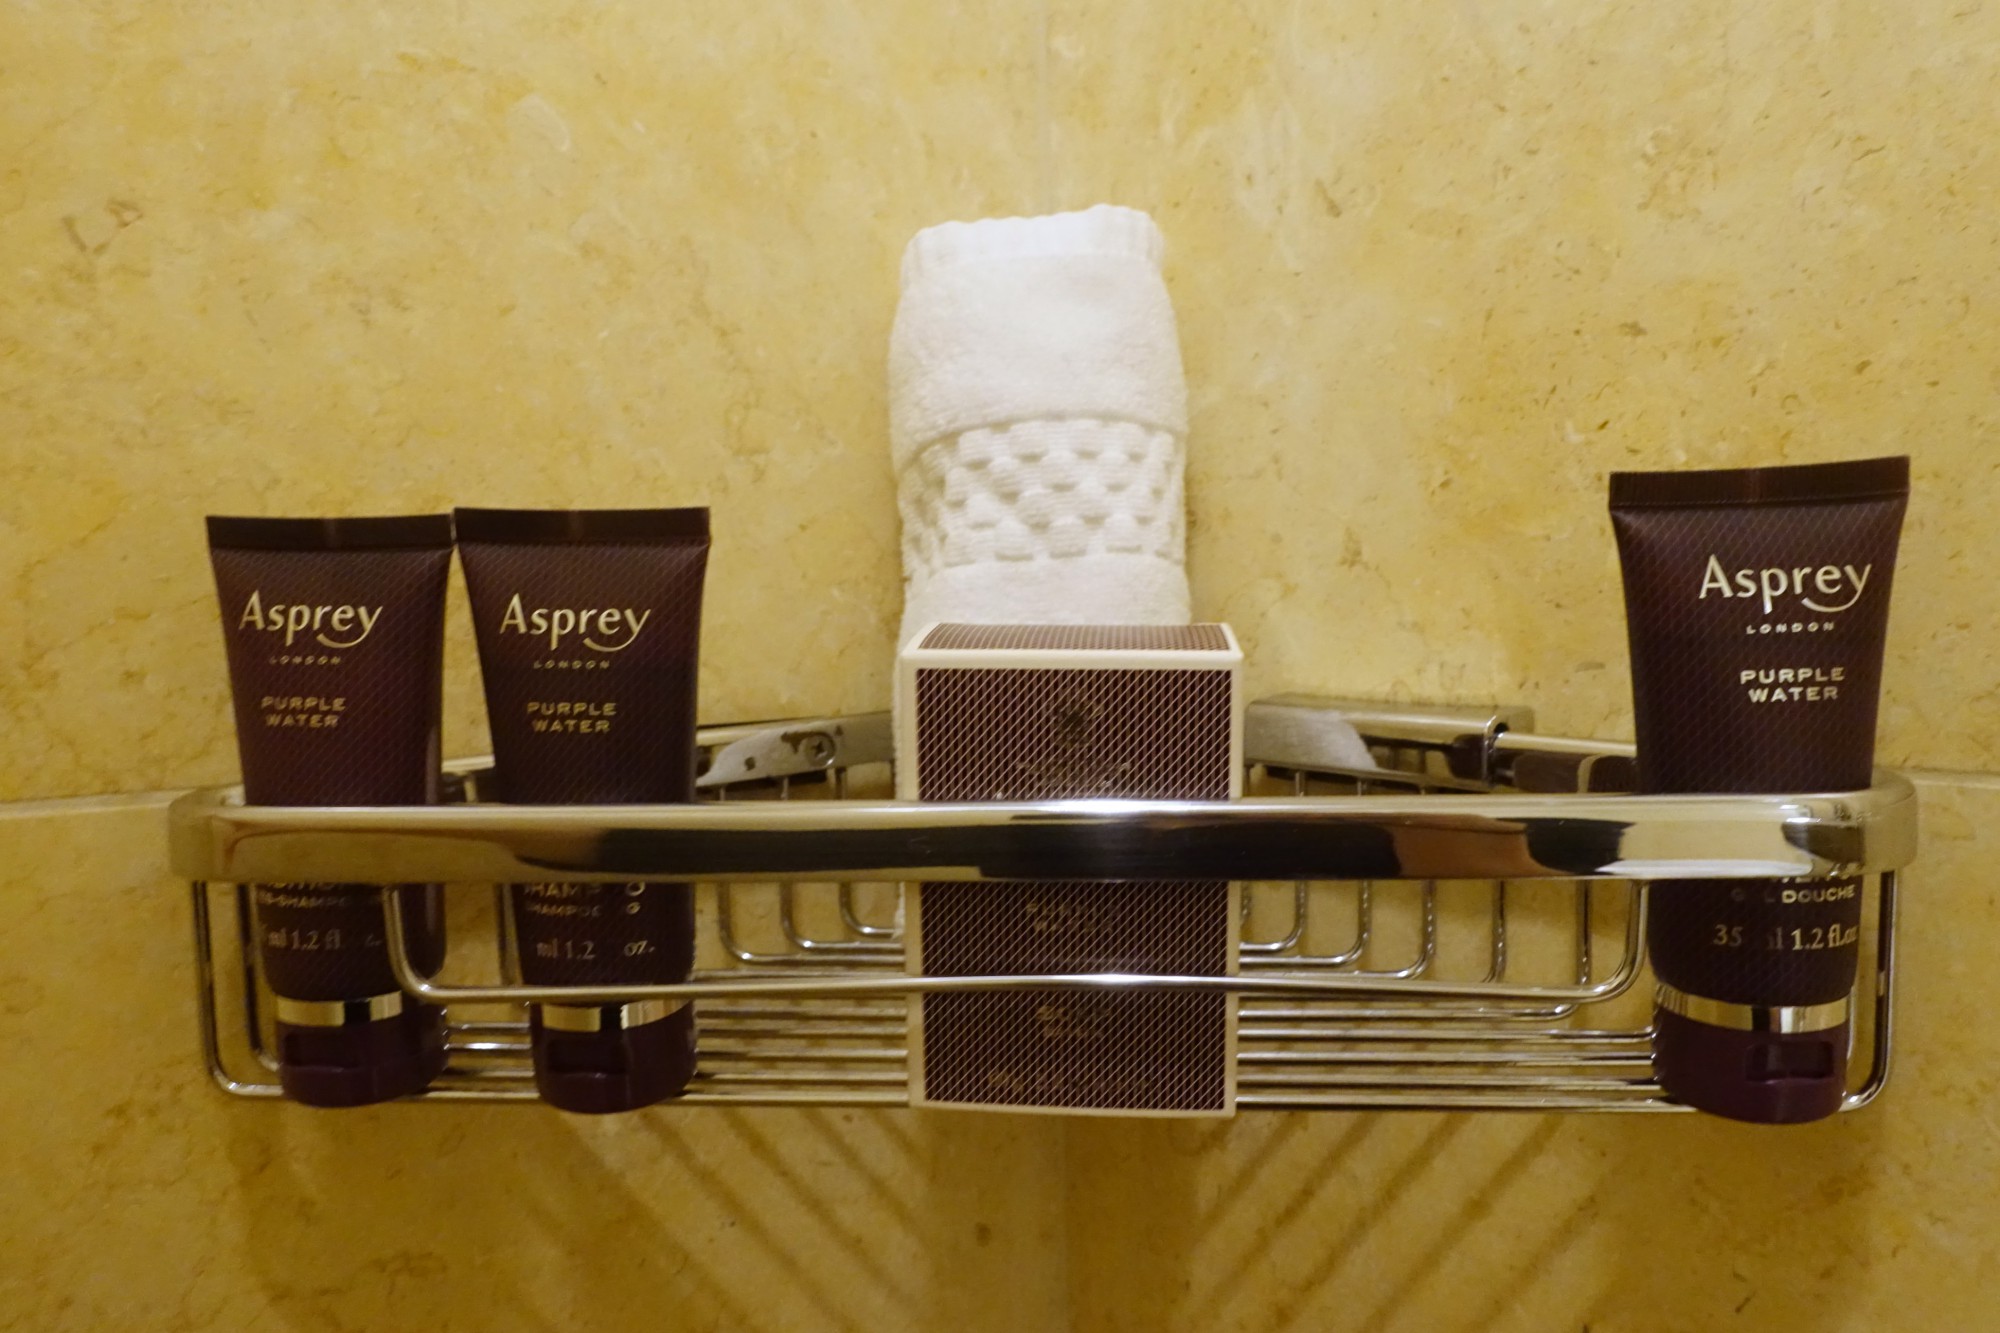 Asprey Purple Water Bath Products, Ritz-Carlton Grand Cayman Review